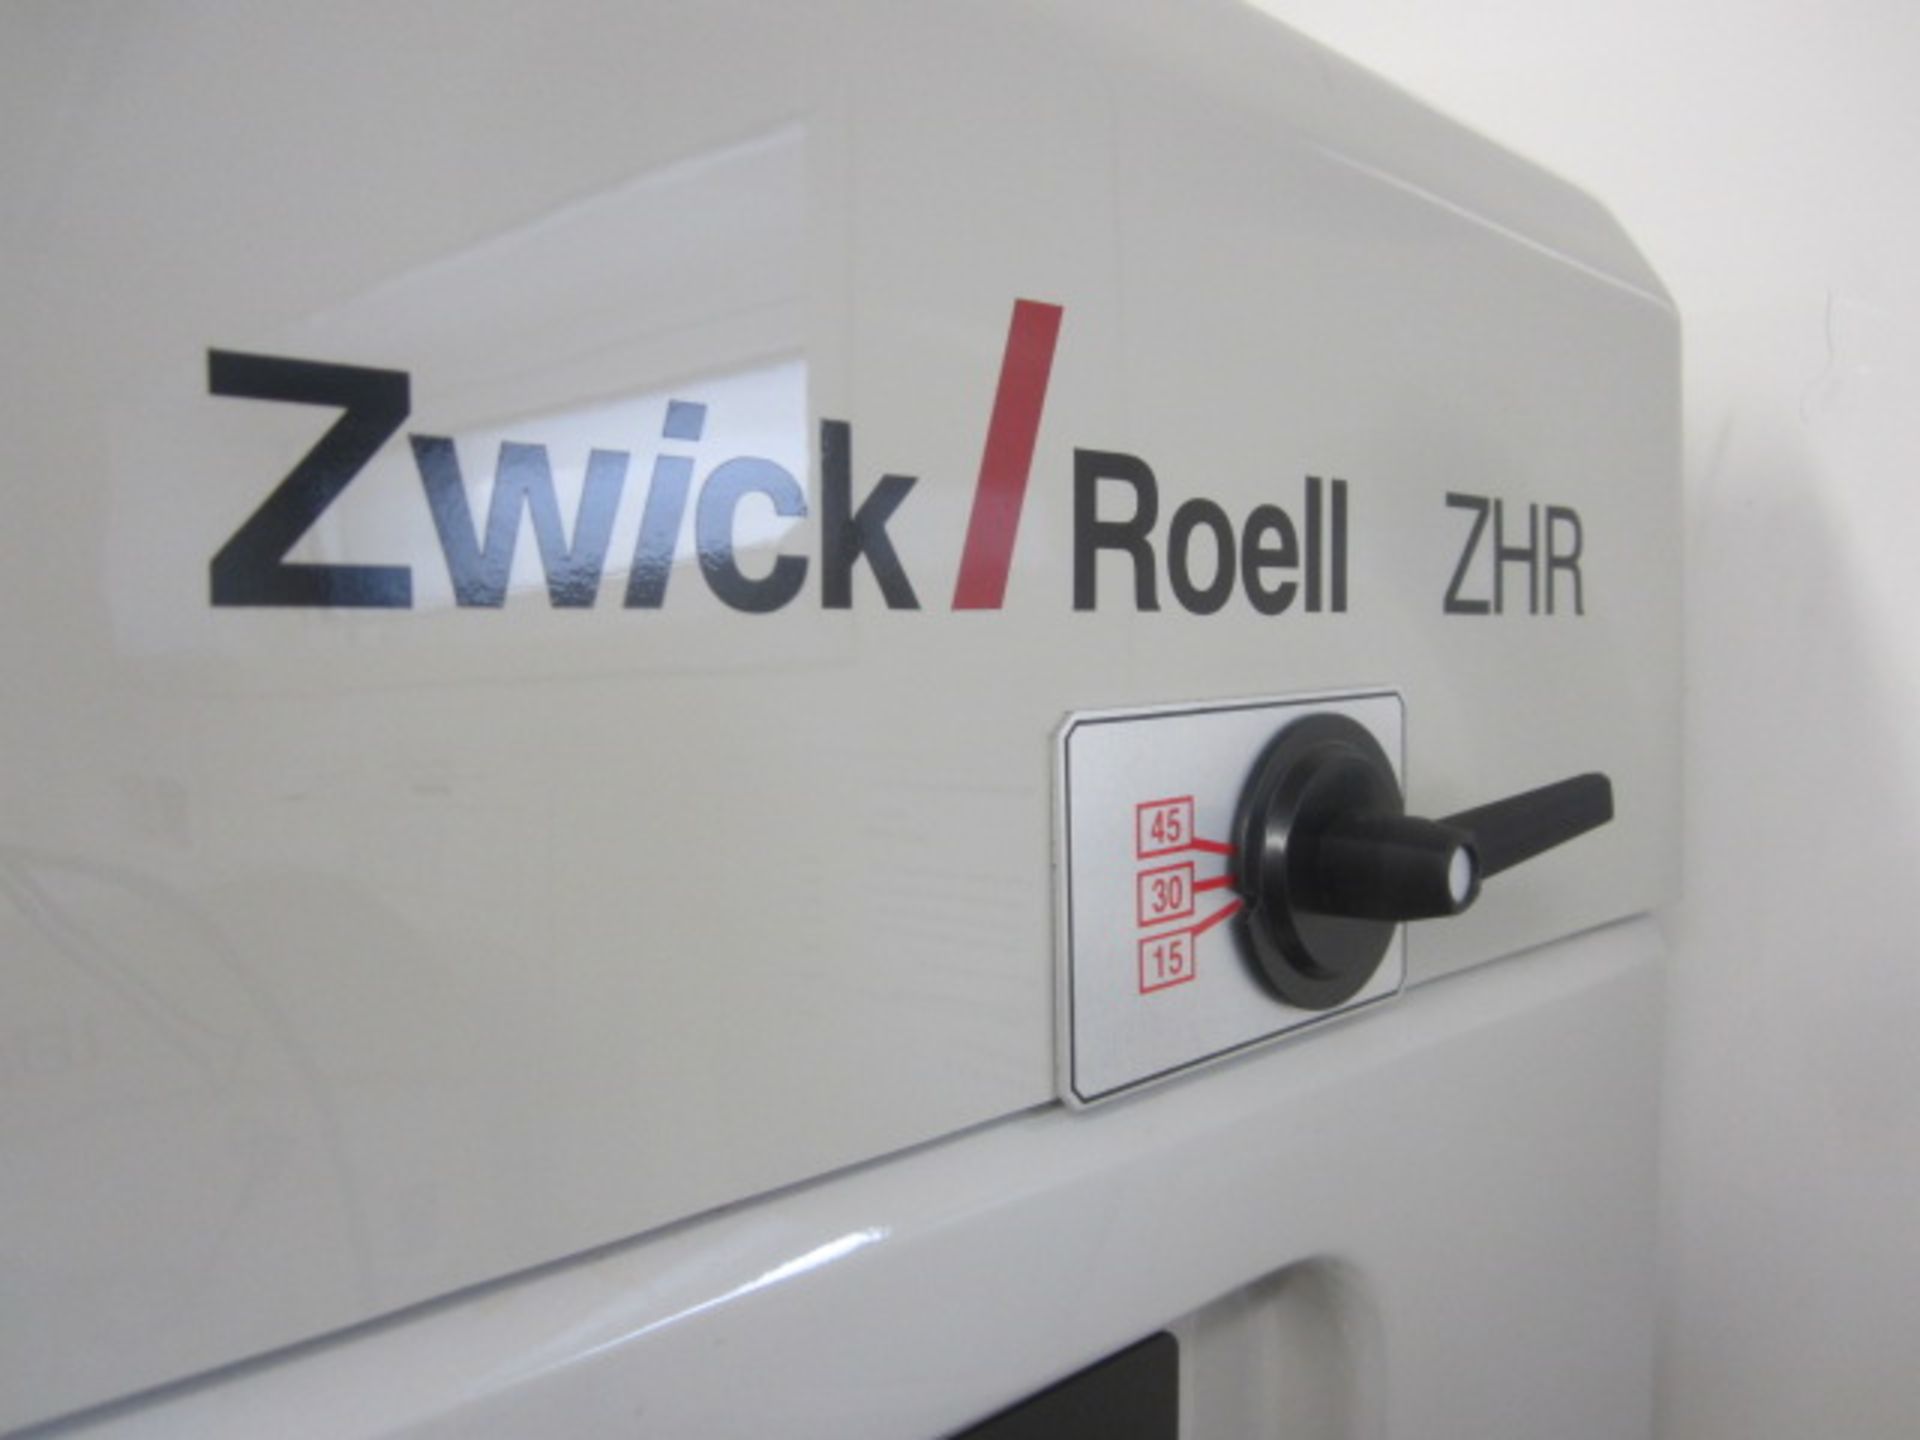 Zwick Roell ZHR hardness testing machine, machine type 4045AK, serial no. 124480 (2012) - Image 6 of 6